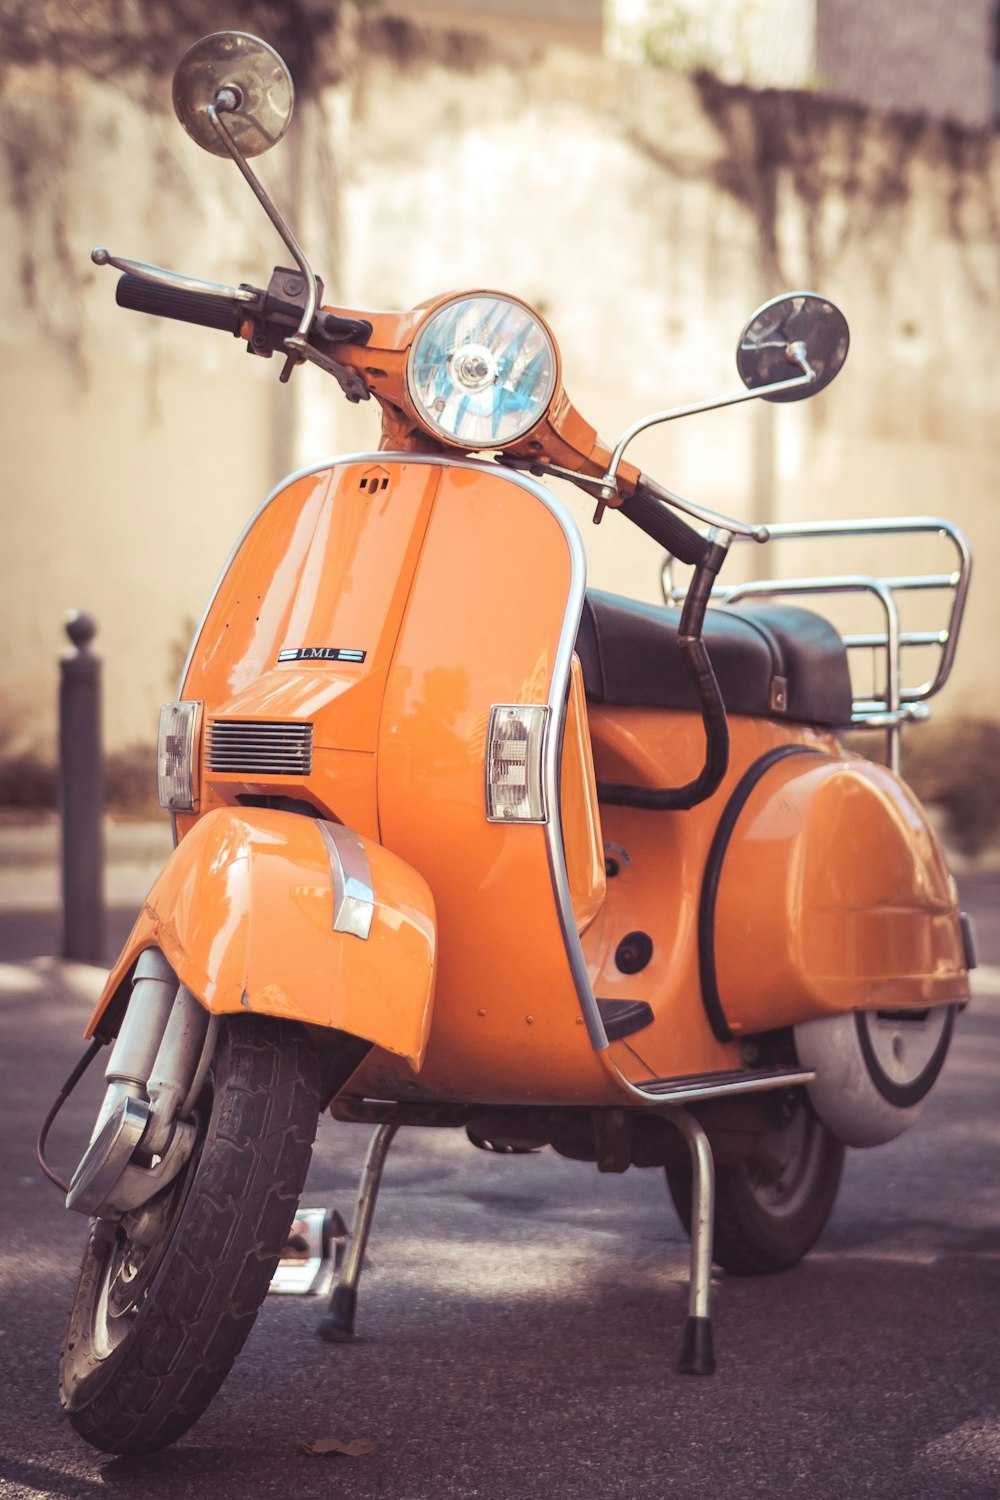 scooter do motor laranja e preto